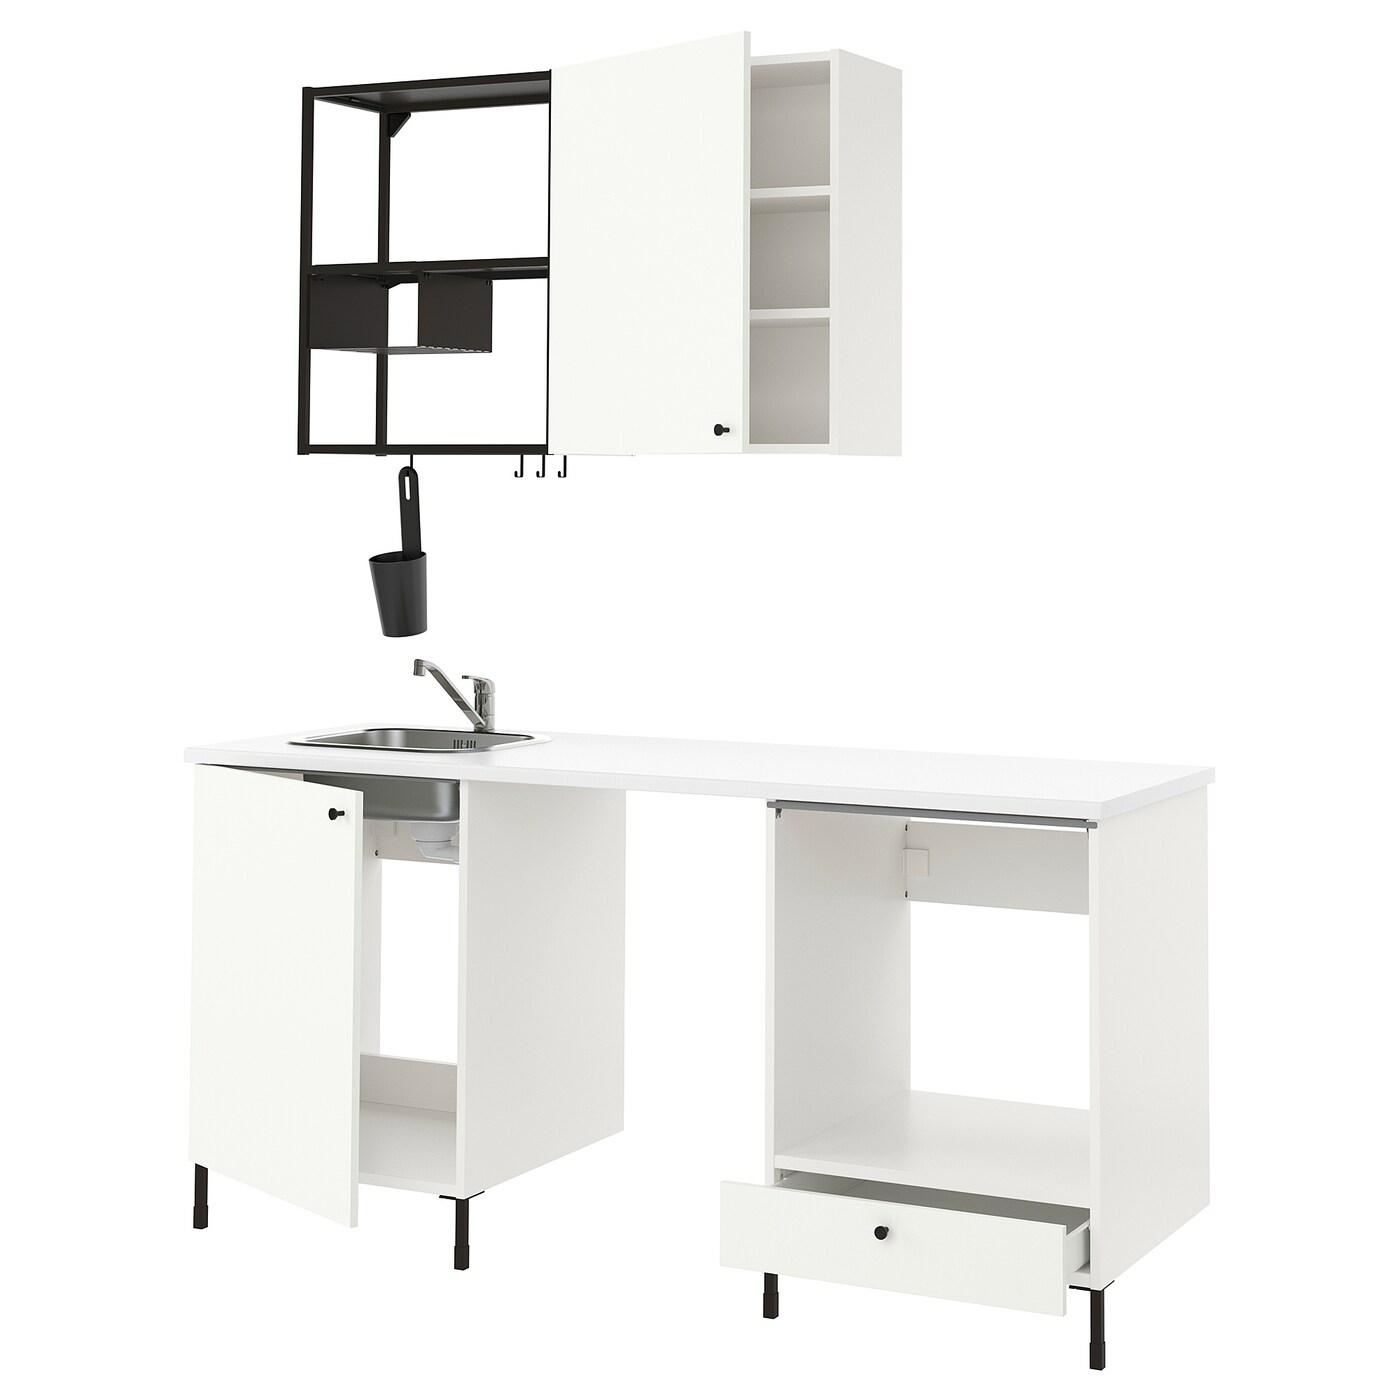 Кухня -  ENHET  IKEA/ ЭНХЕТ ИКЕА, 222х183 см, белый/черный